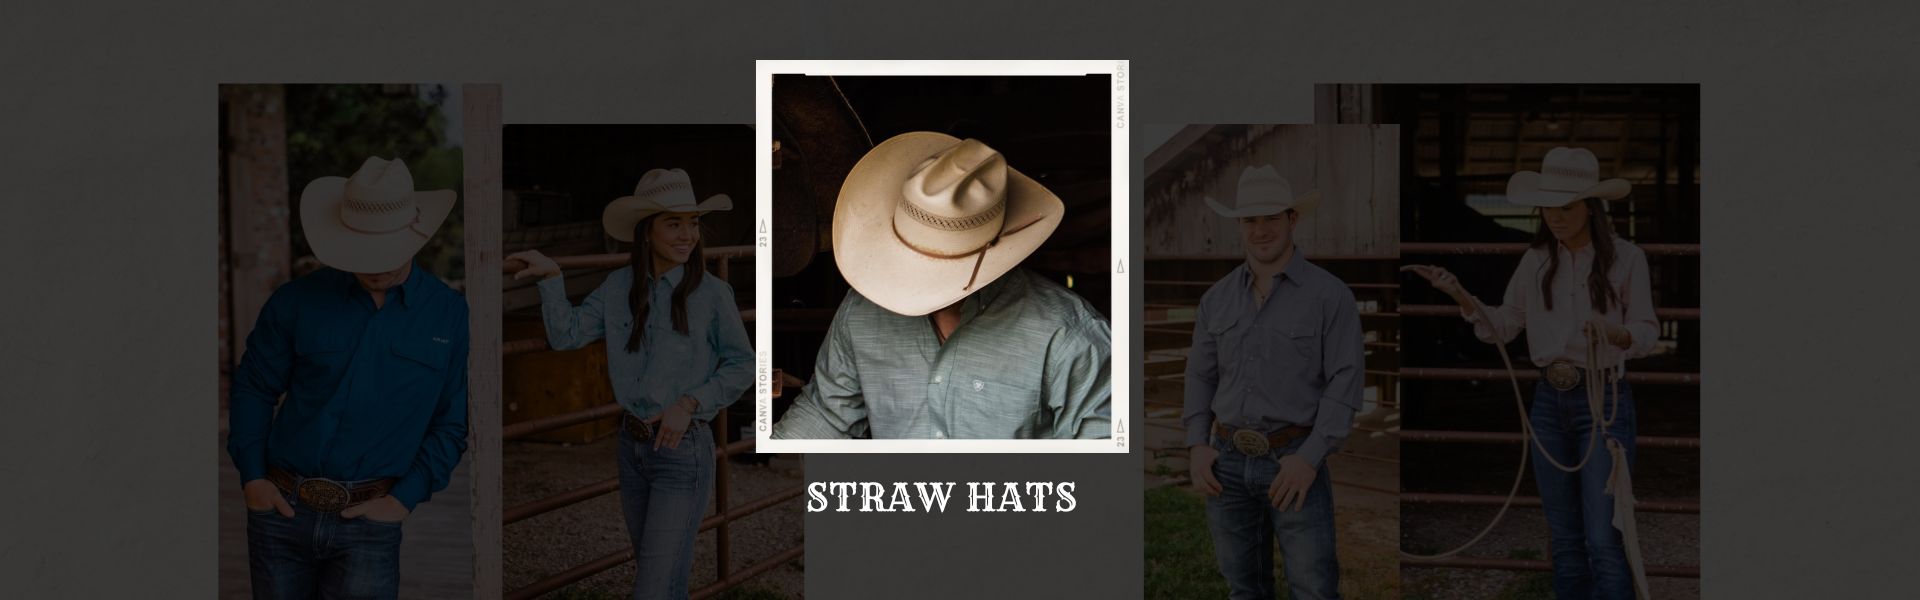 Straw Hats